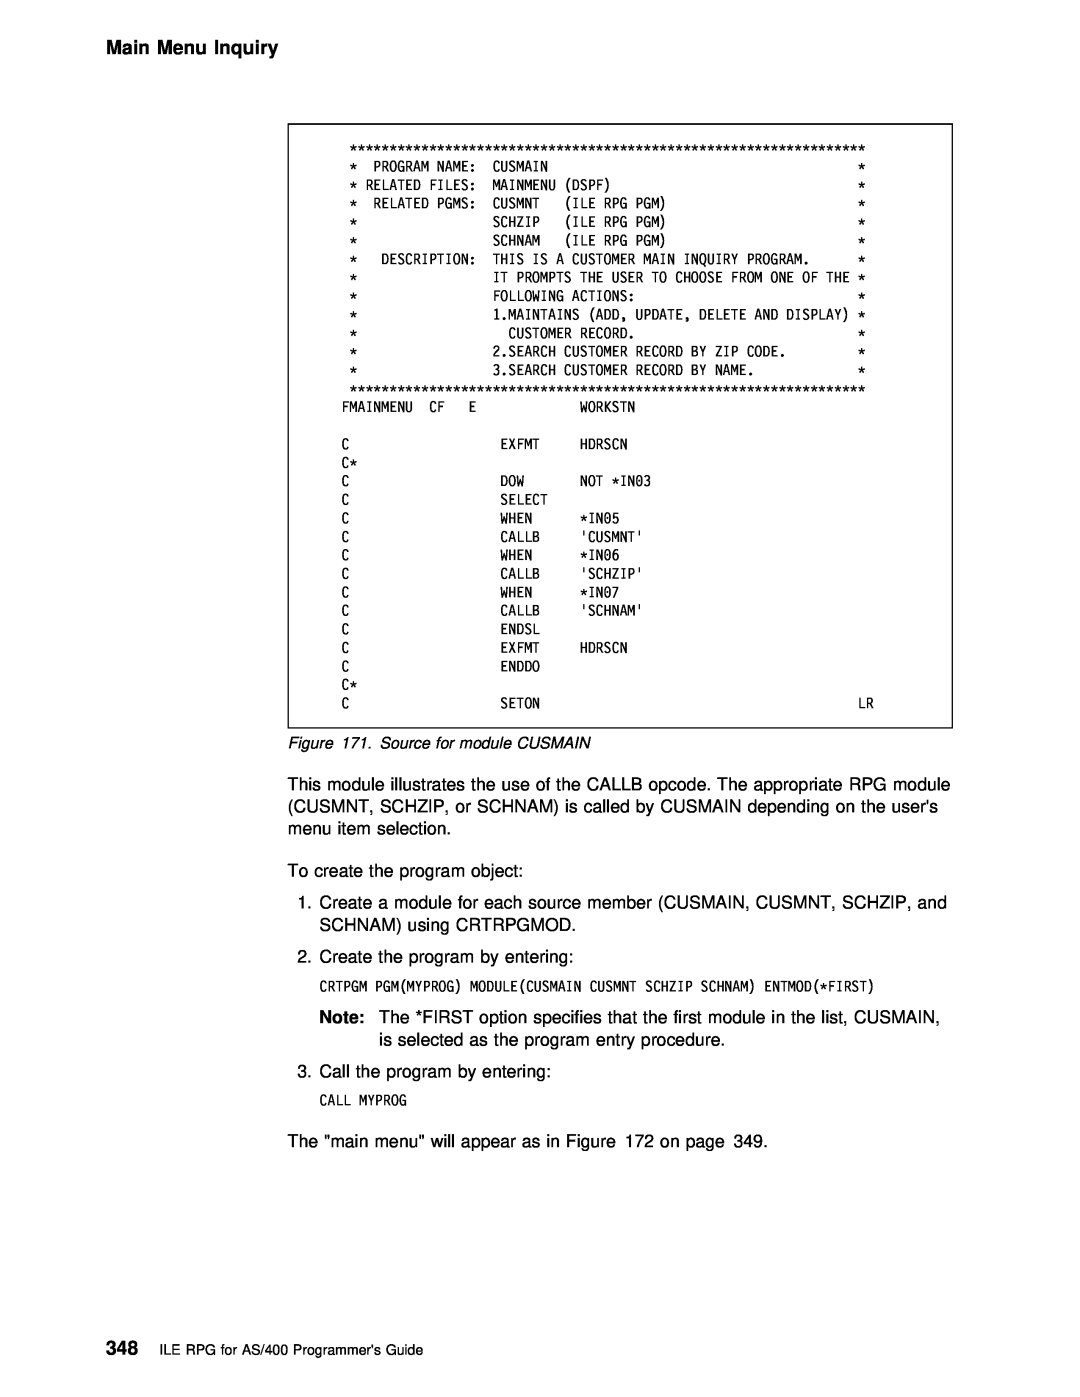 IBM manual Main Menu Inquiry, Source for module CUSMAIN, ILE RPG for AS/400 Programmers Guide 